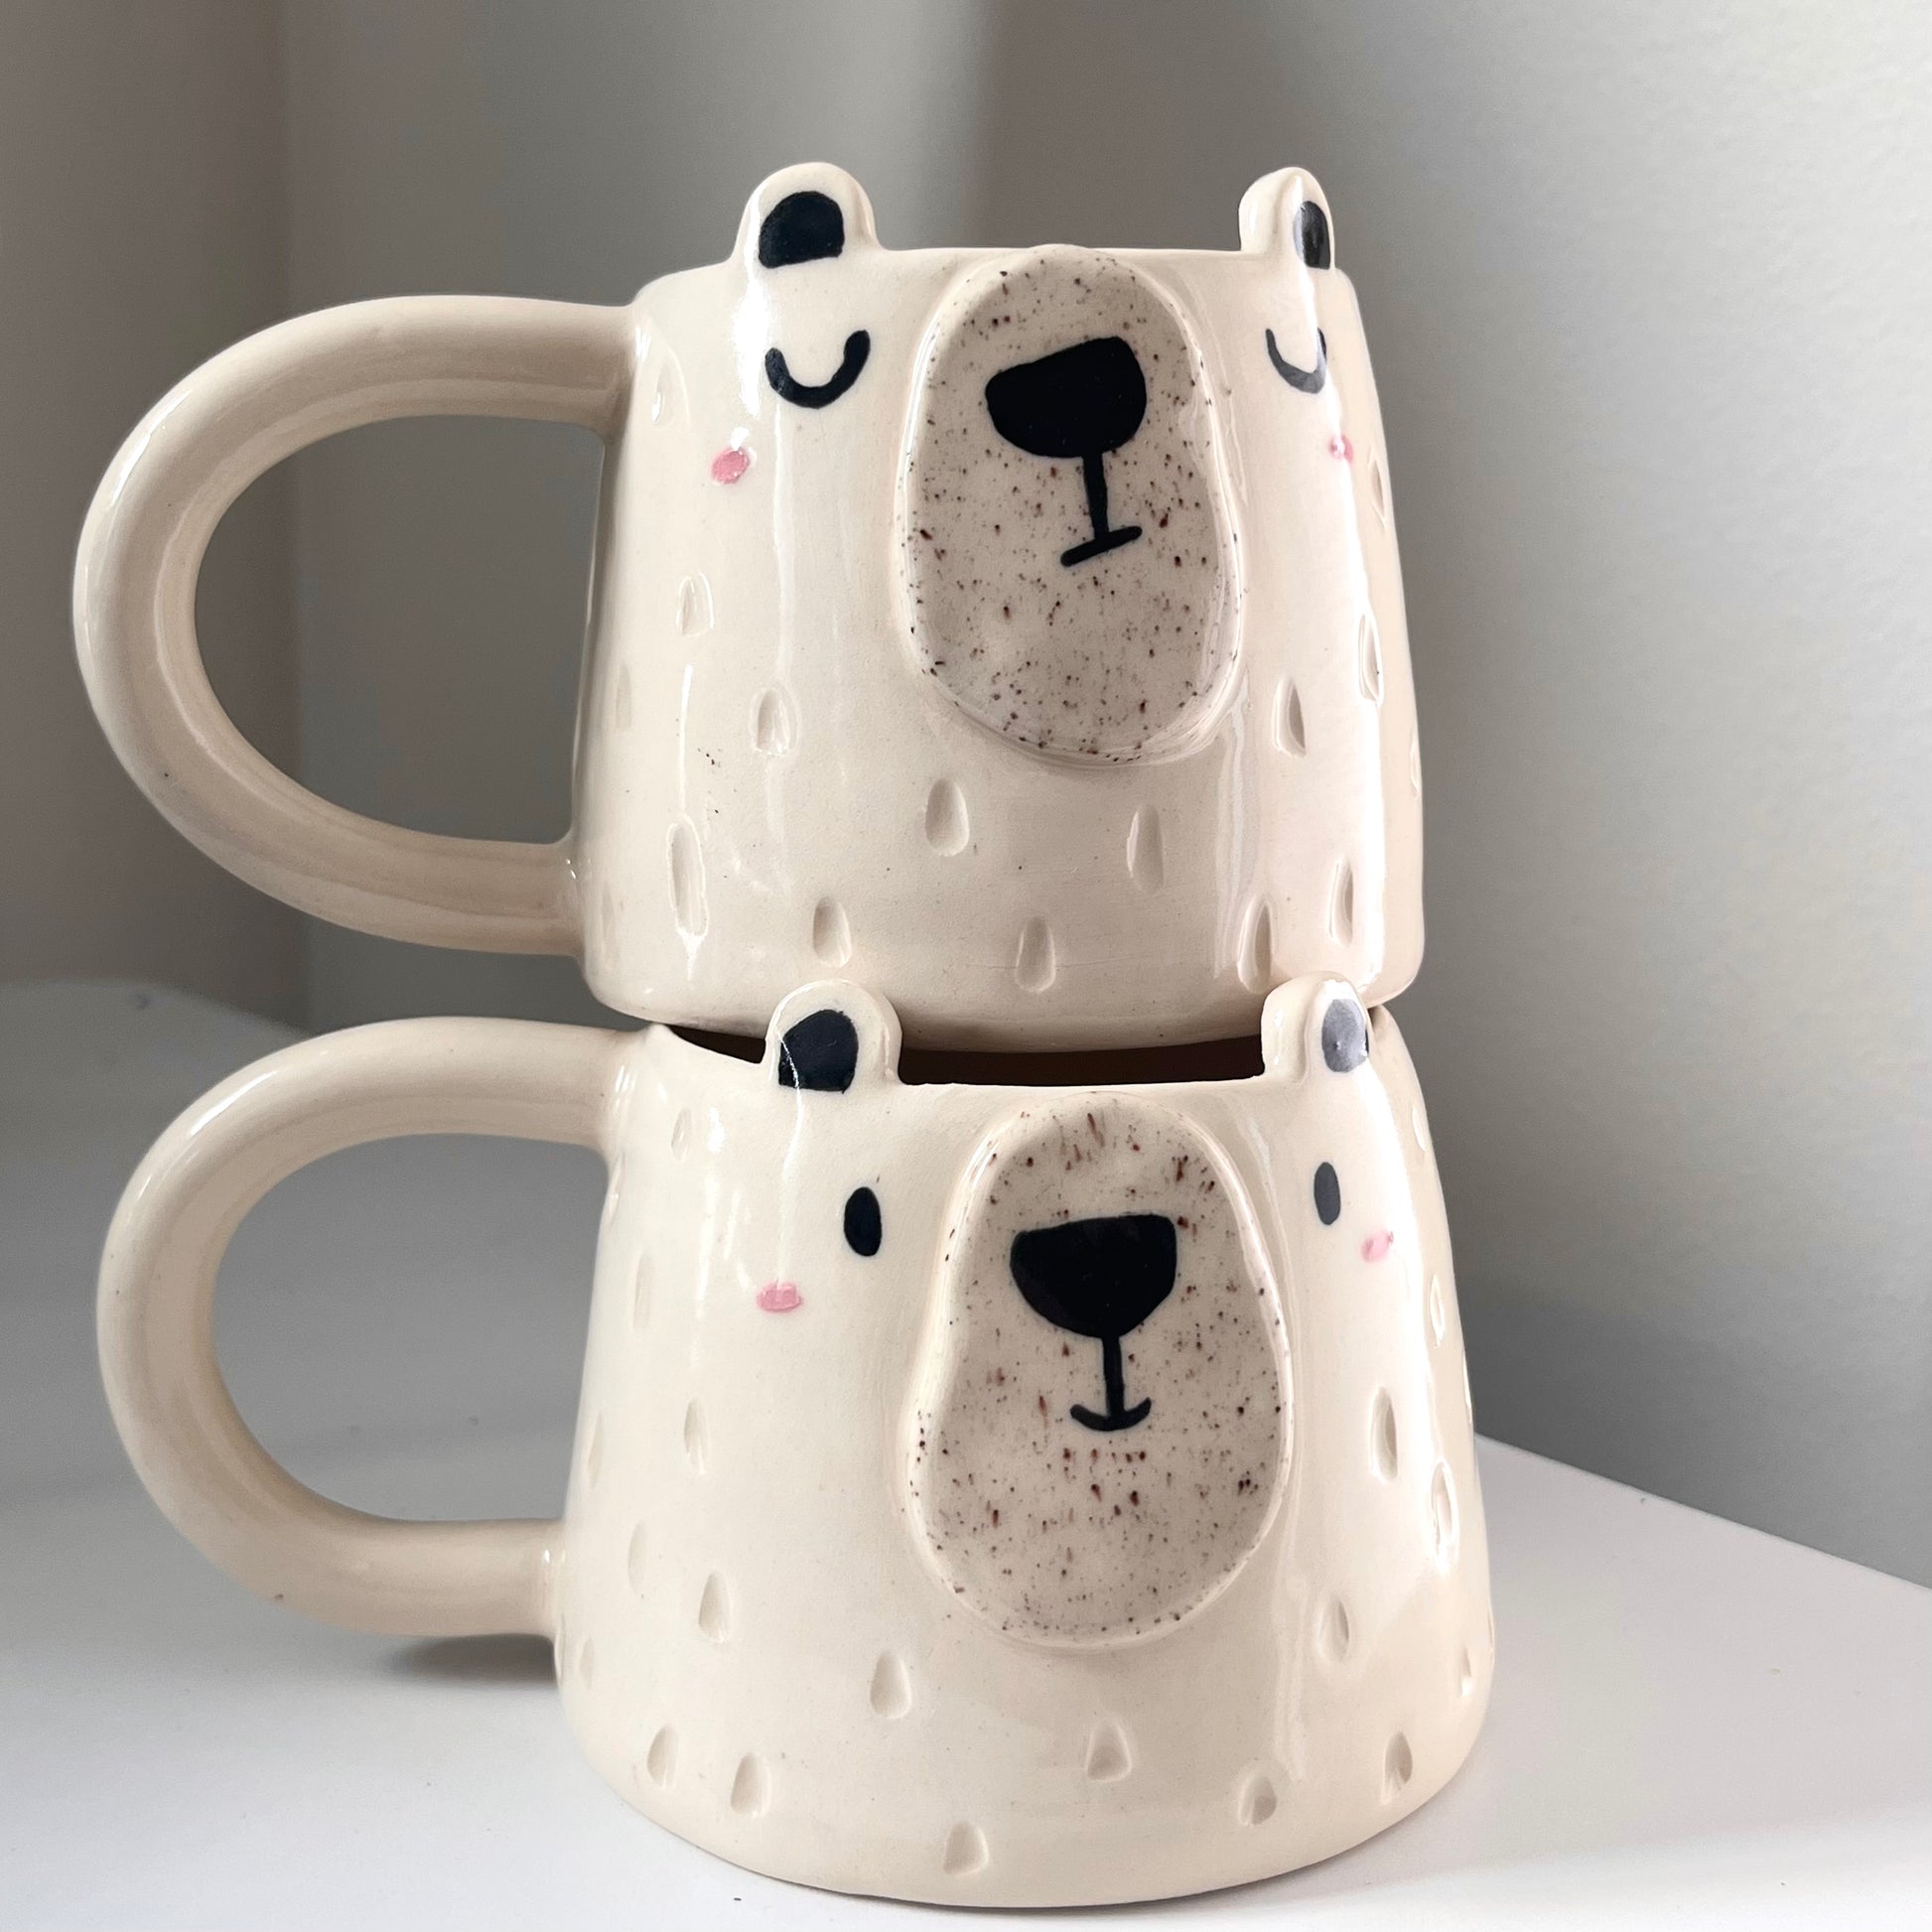 Unusual Polar Bear Mug Mockup Graphic by Designs by Donna · Creative Fabrica